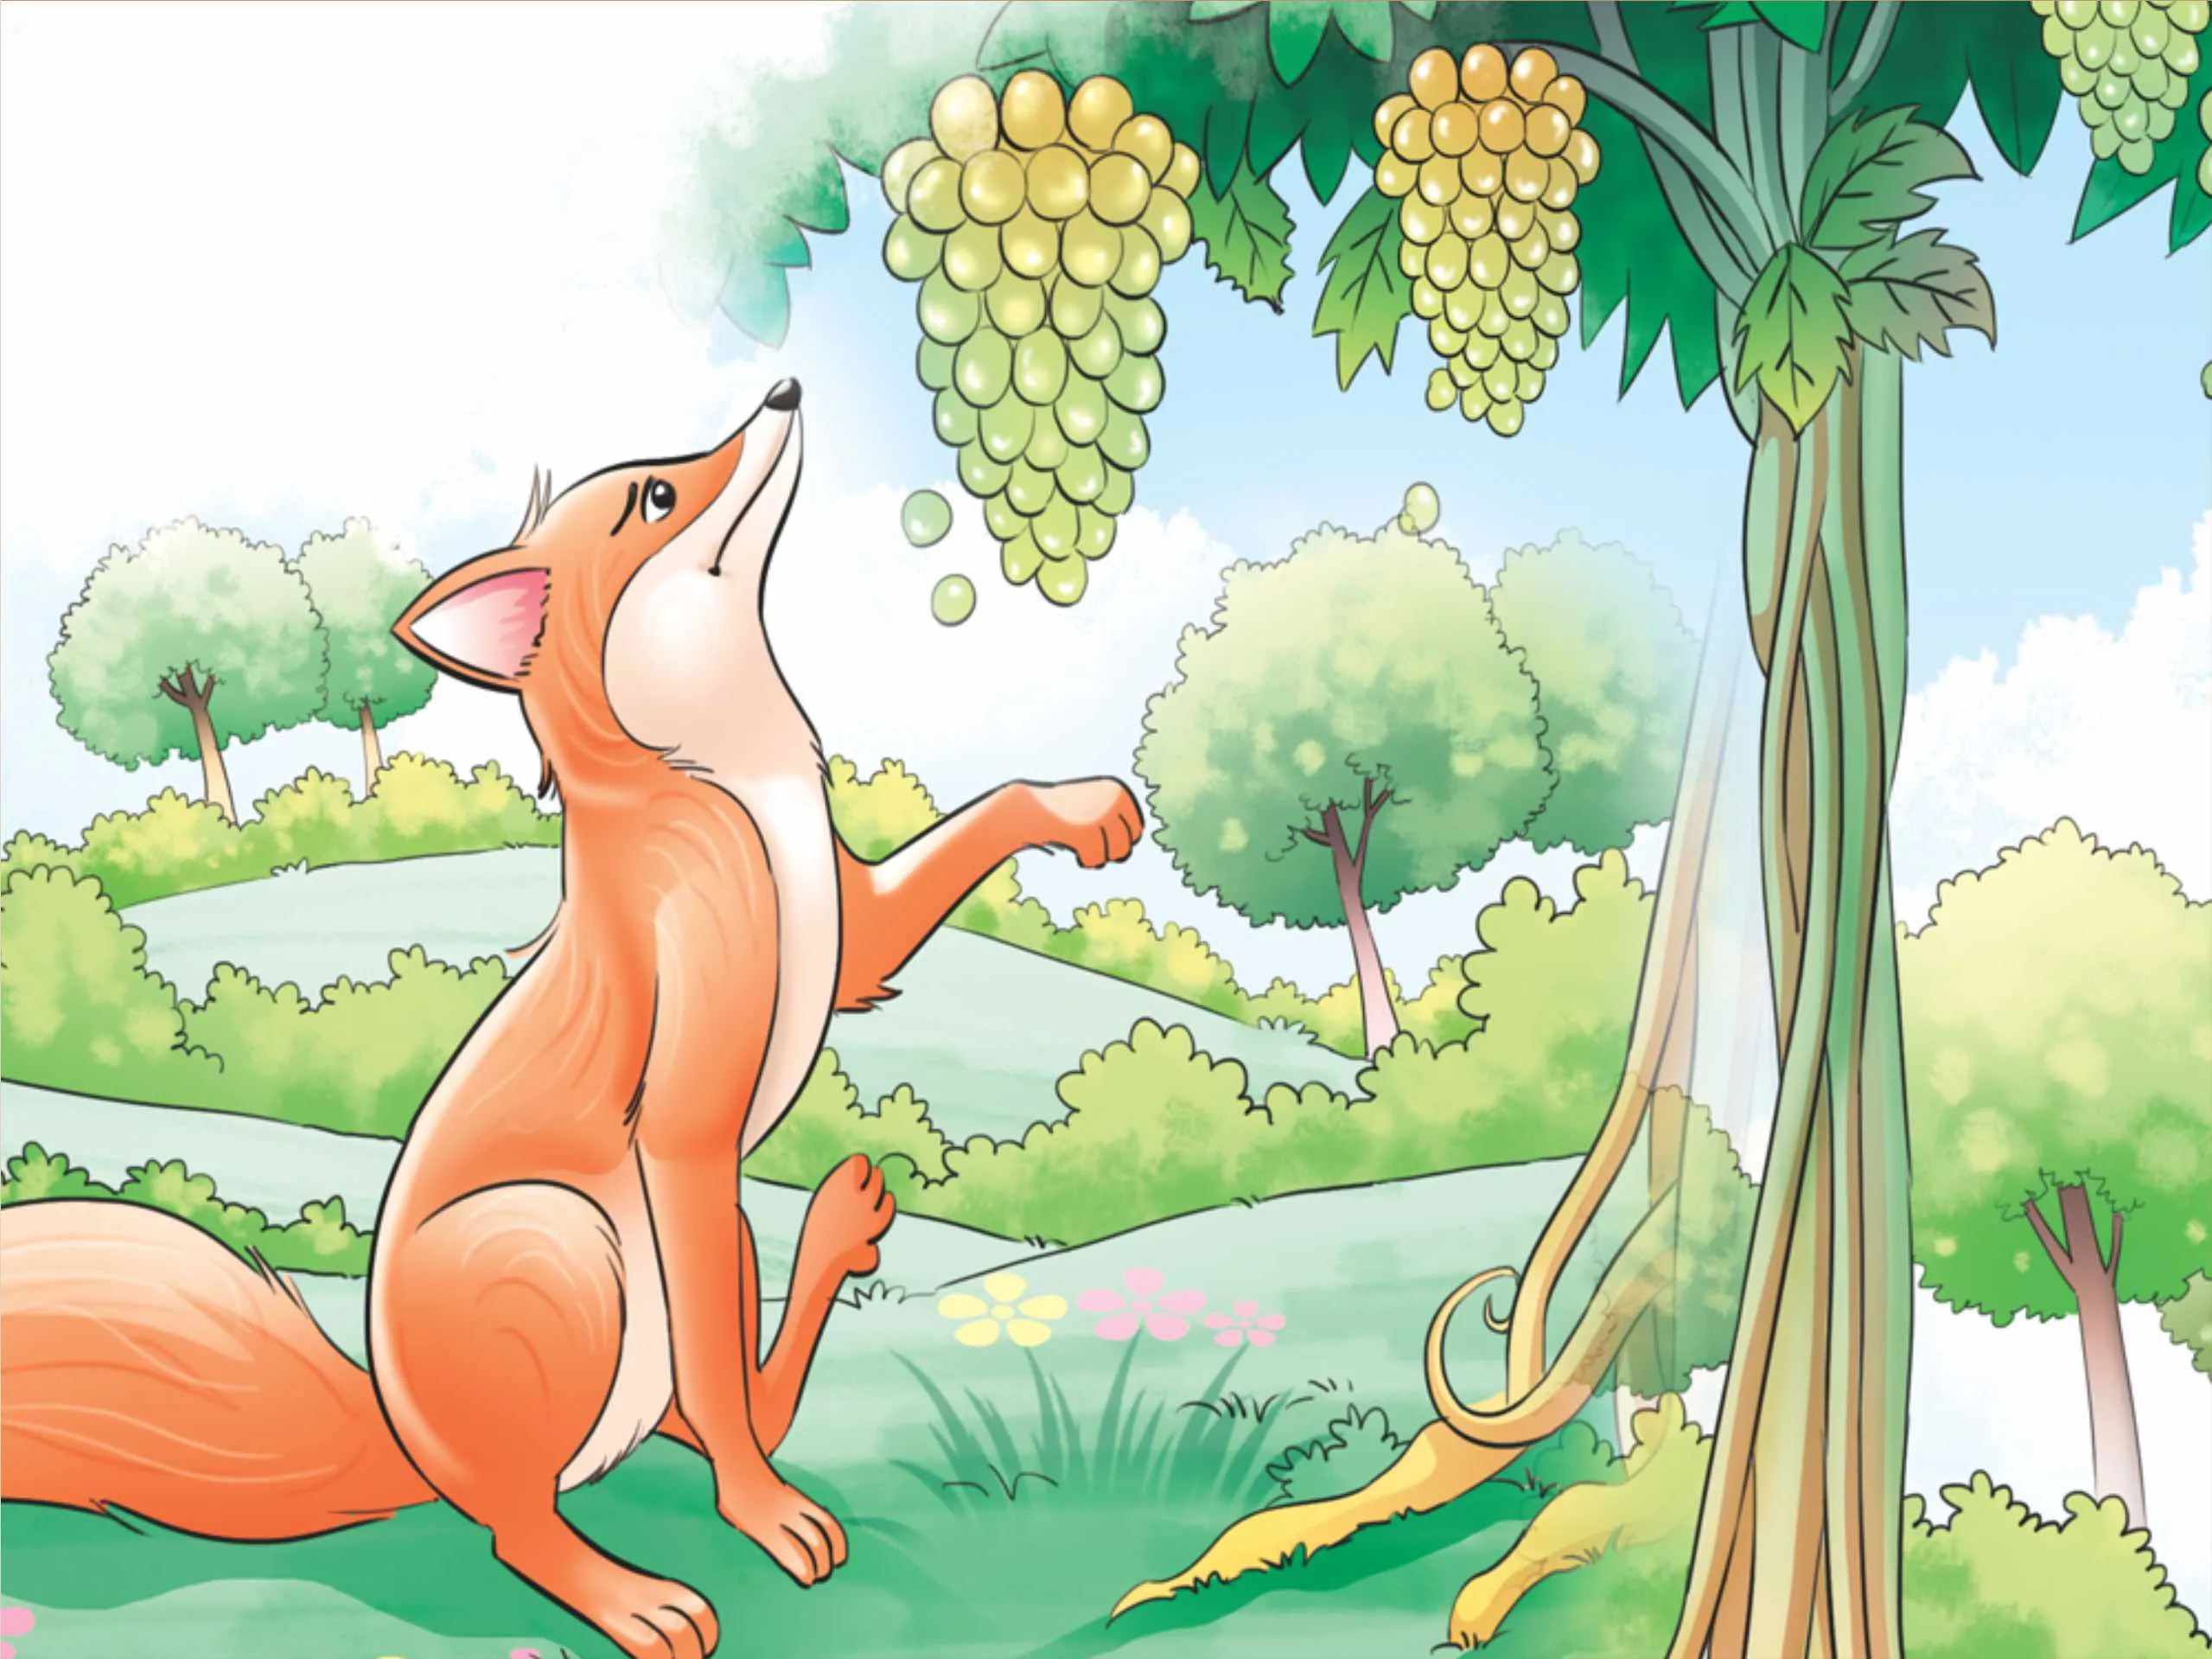 Fox and grapes cartoon image